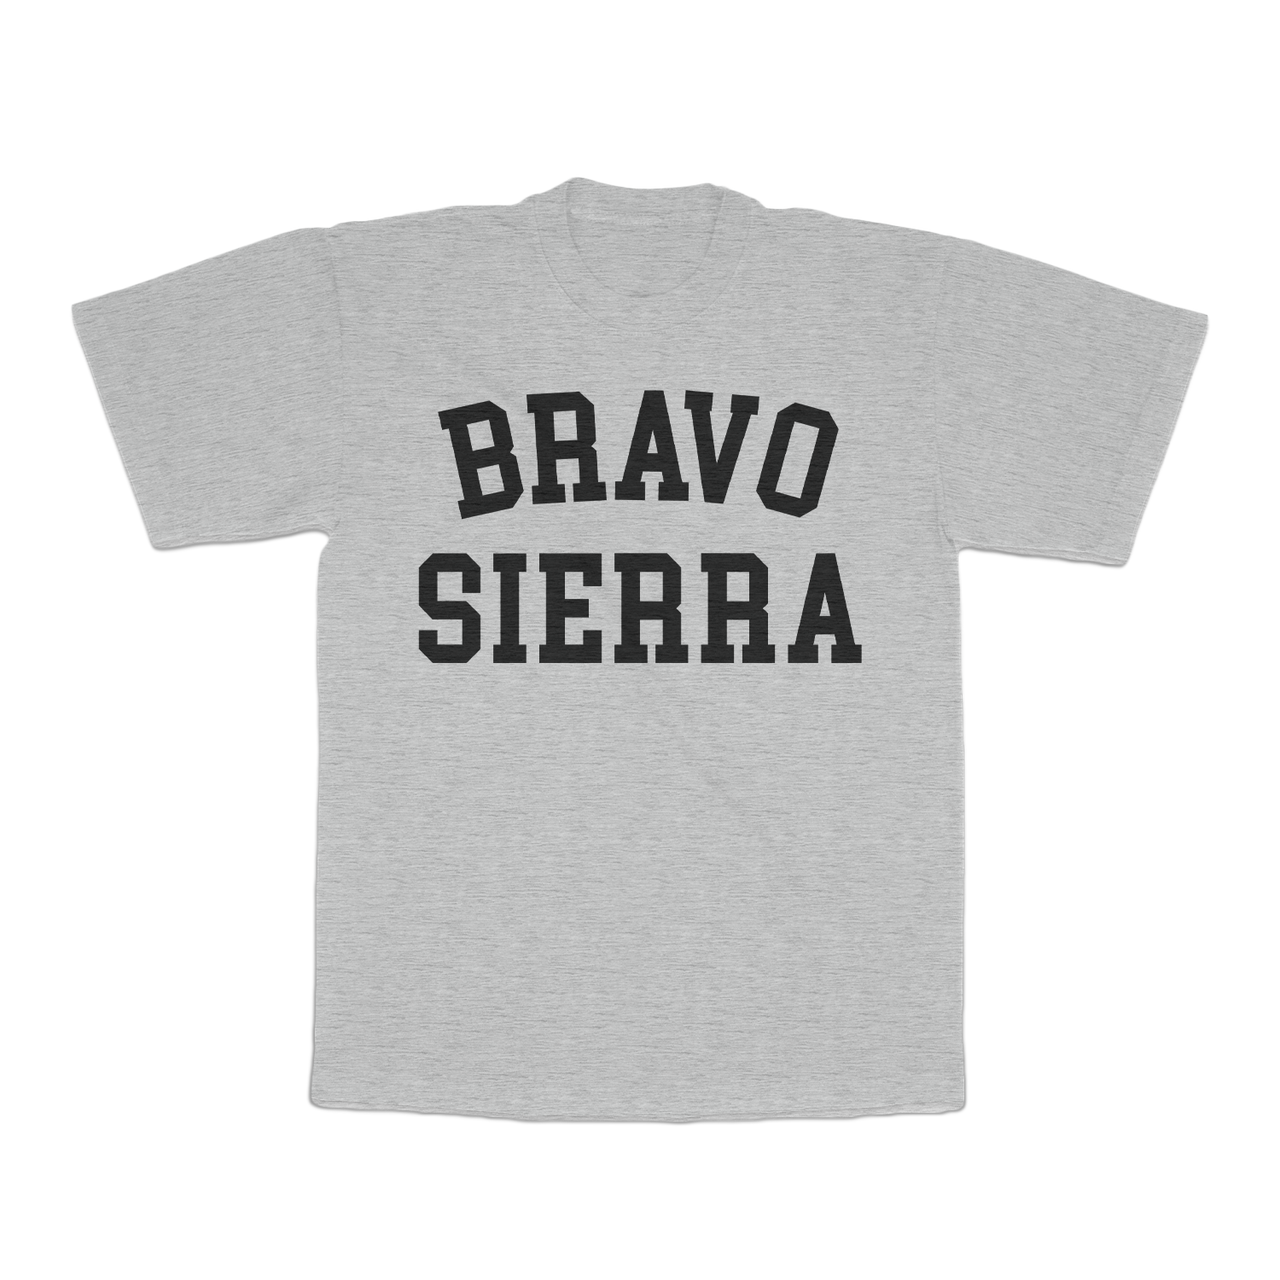 BRAVO SIERRA T-SHIRT